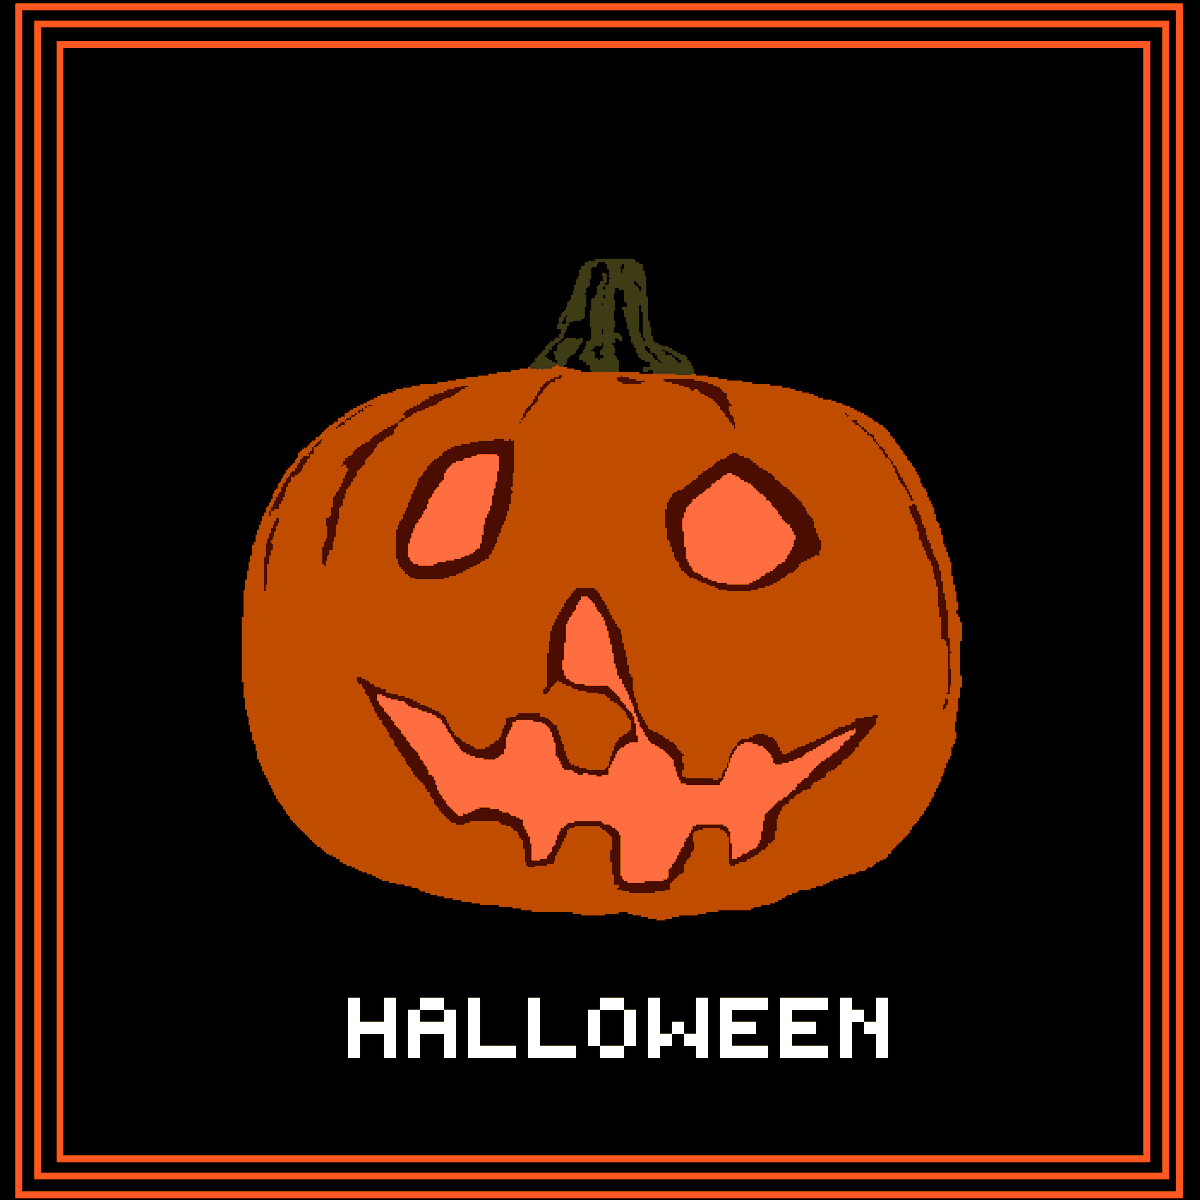 Happy Halloween! #31DaysOfHorror #31daysofhalloween #horrorfamily #31daysofhorror #31daysofhorrormovies #halloweencostume #halloweenmakeup #horror #halloween #31daysofhorrorfilms #31daysofhorrormovies #horrorfamily #horror #spooky #spookyseason #dark #darkart